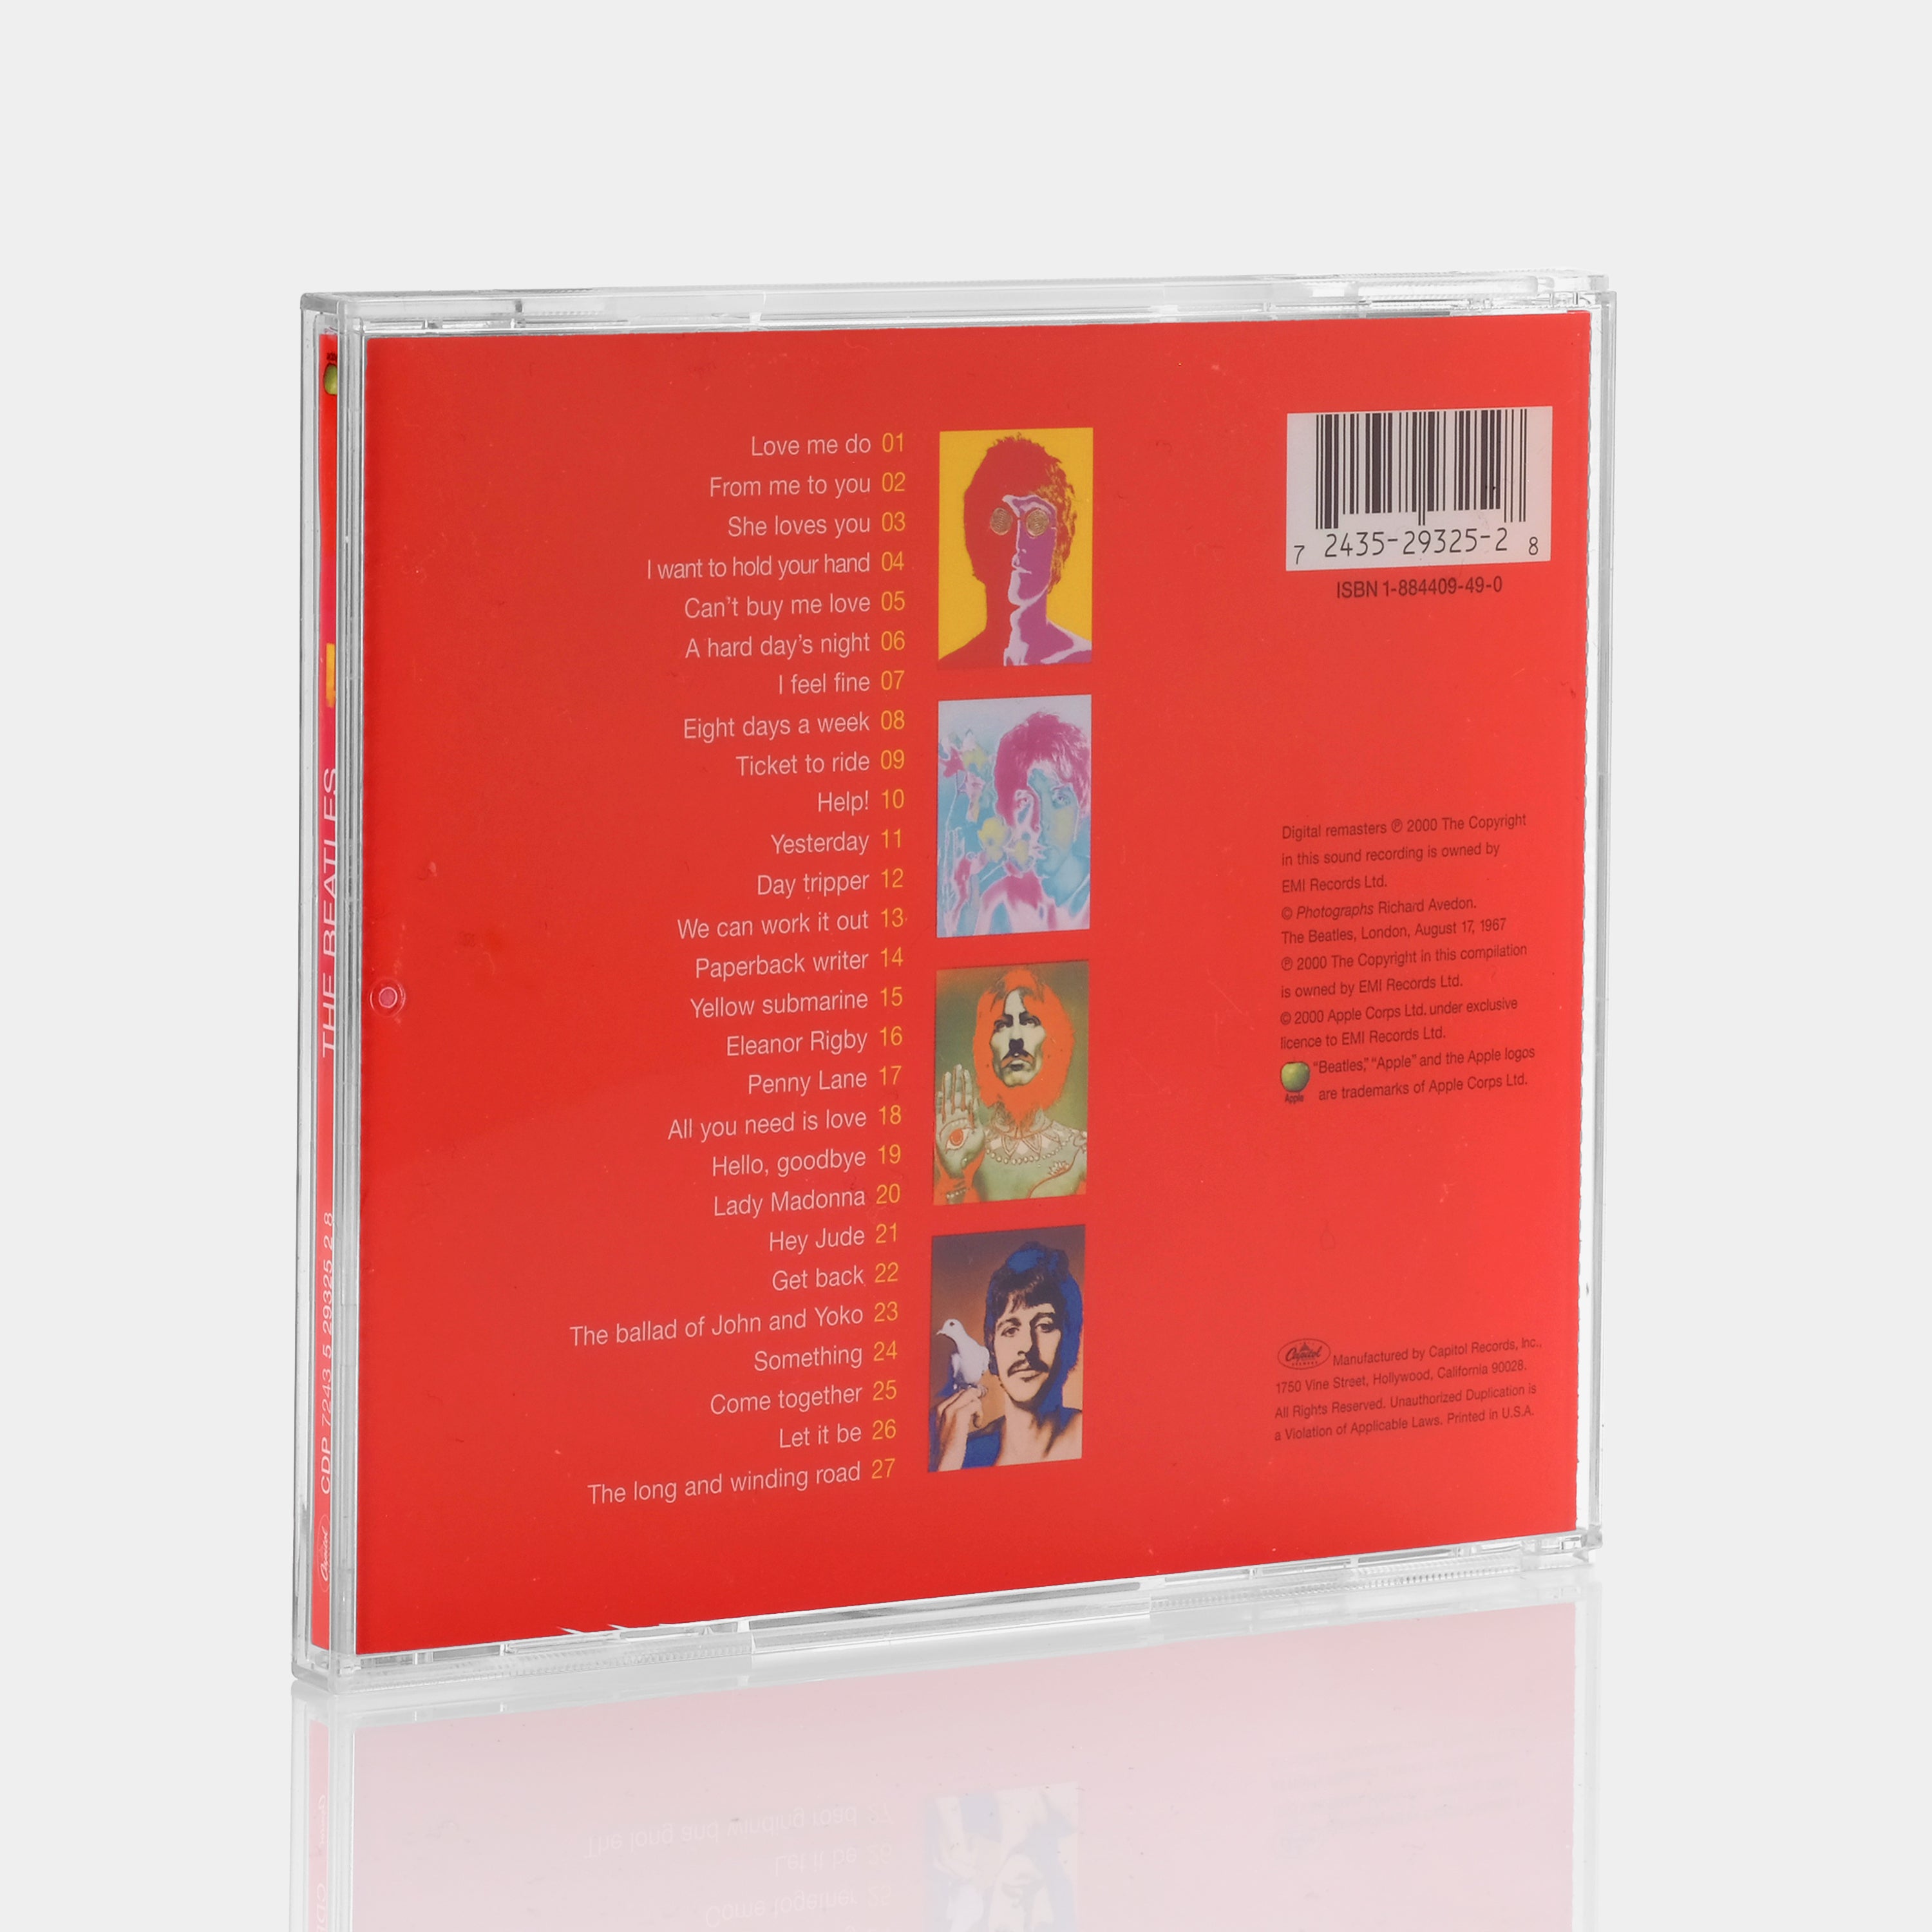 The Beatles - 1 CD